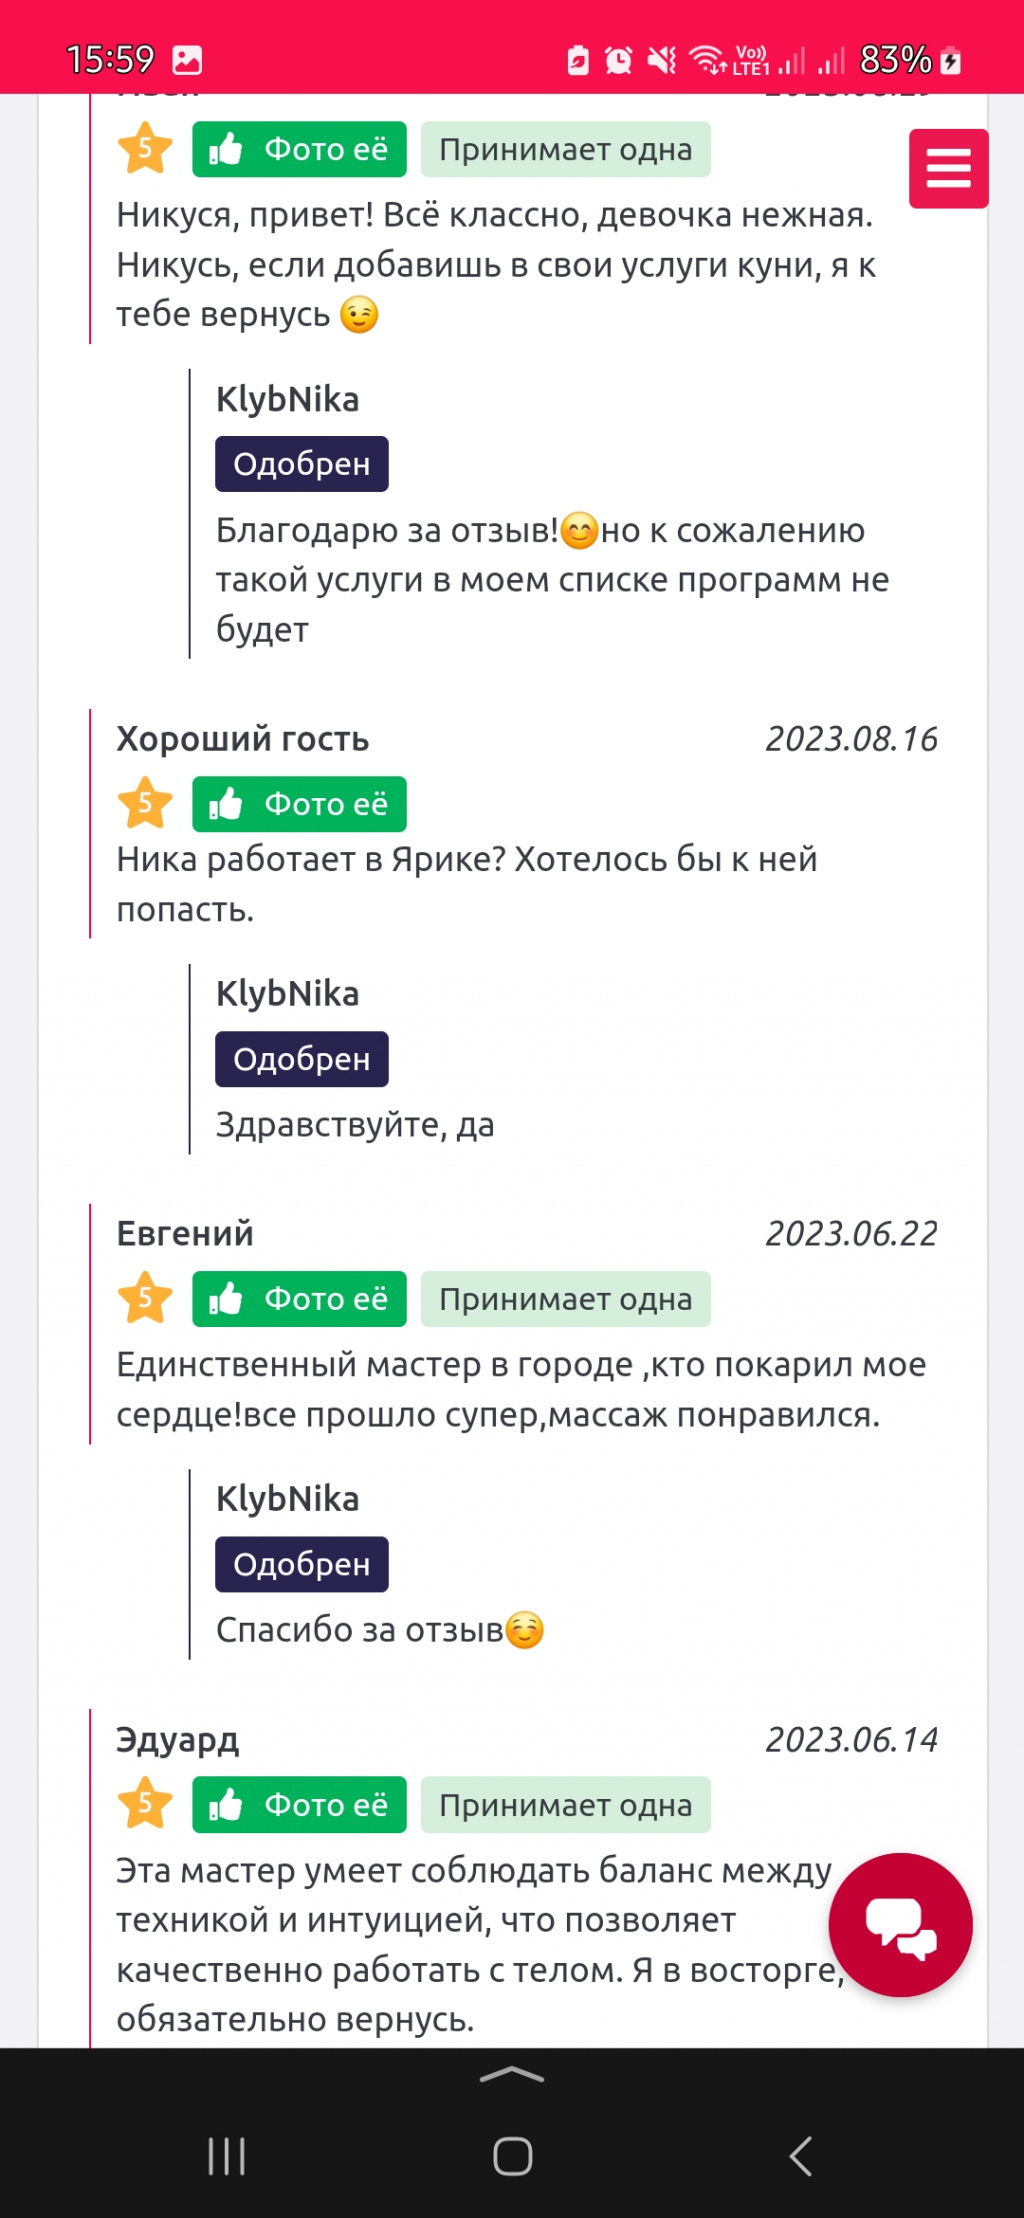 KlybNika Nika: проститутки индивидуалки в Ярославля